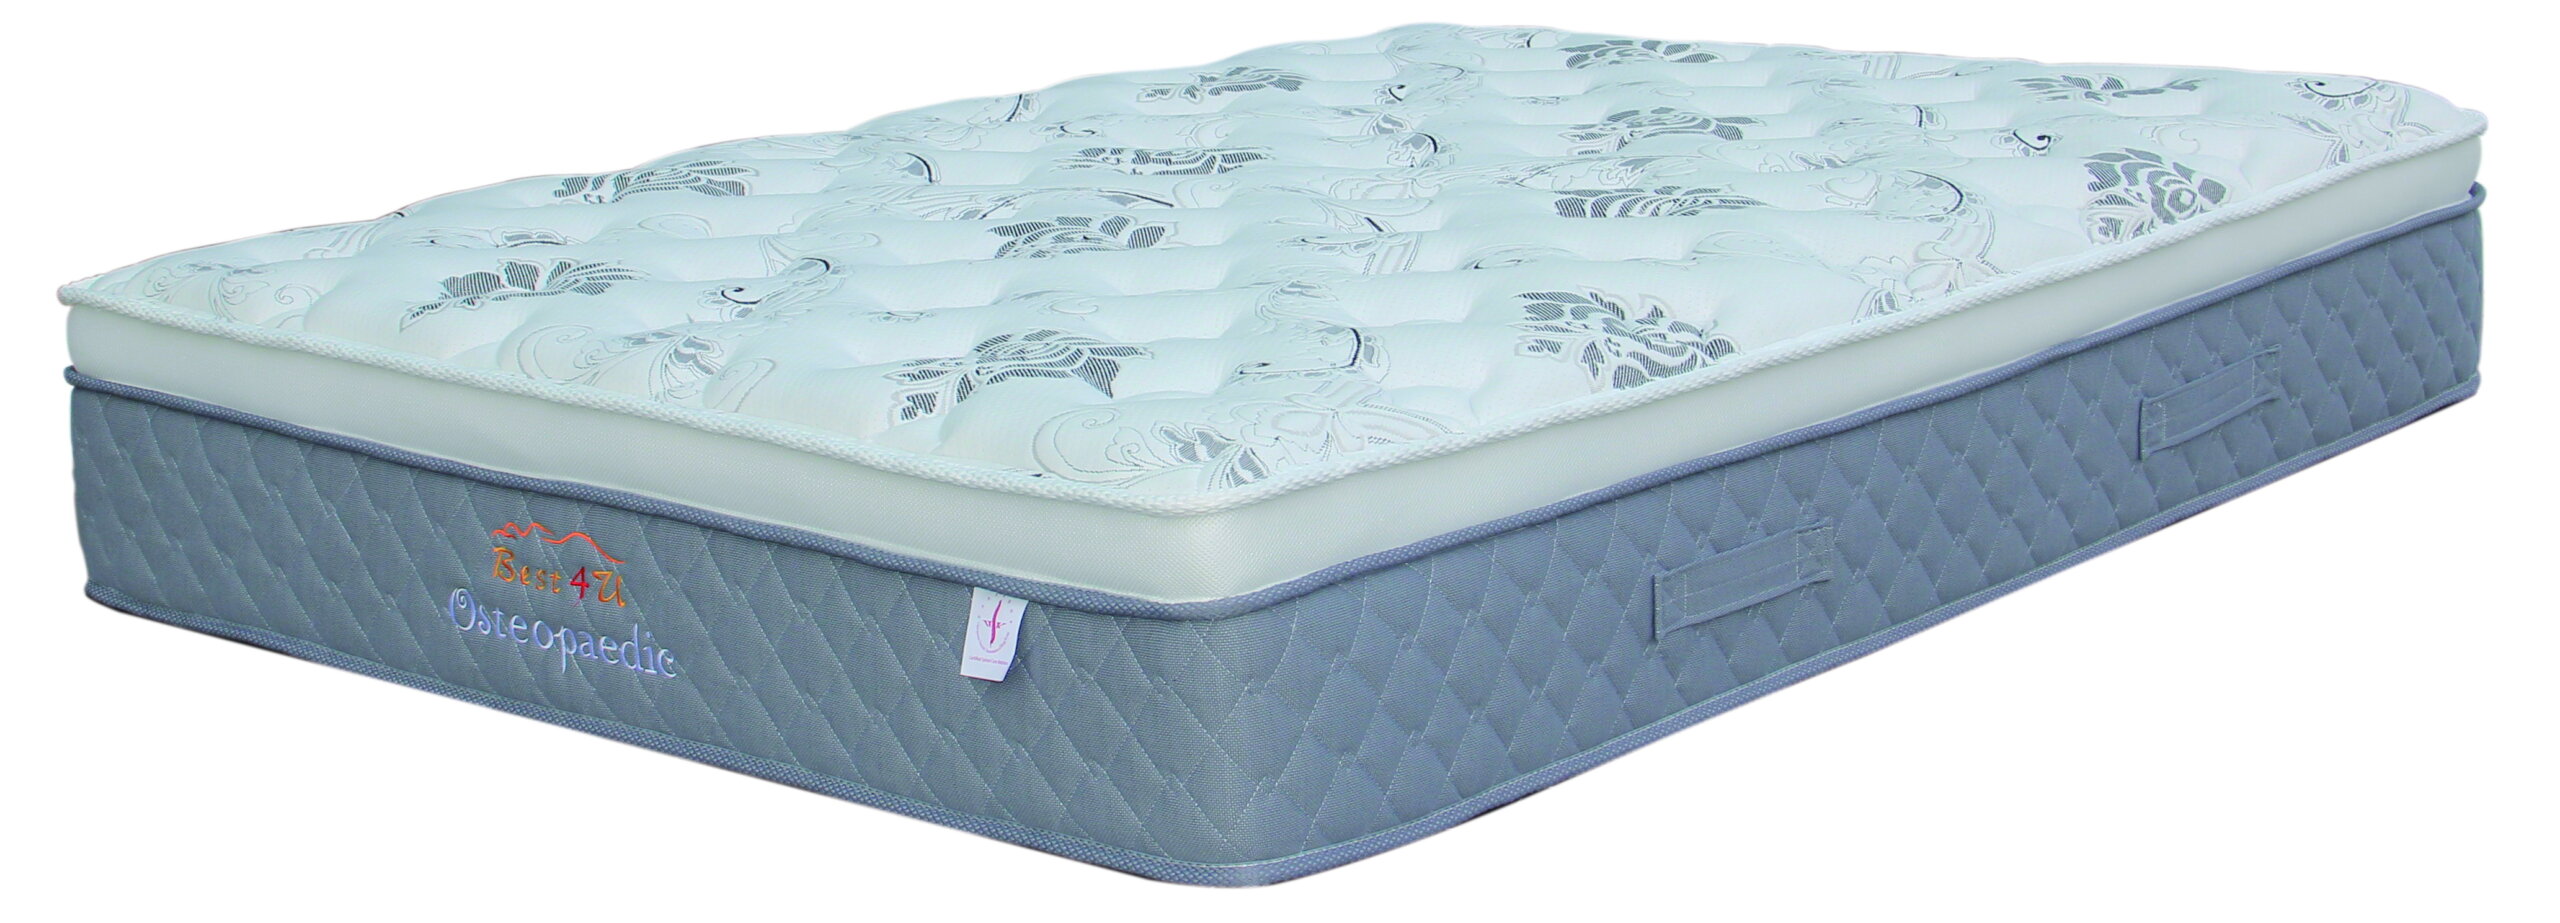 spring foam mattress baby